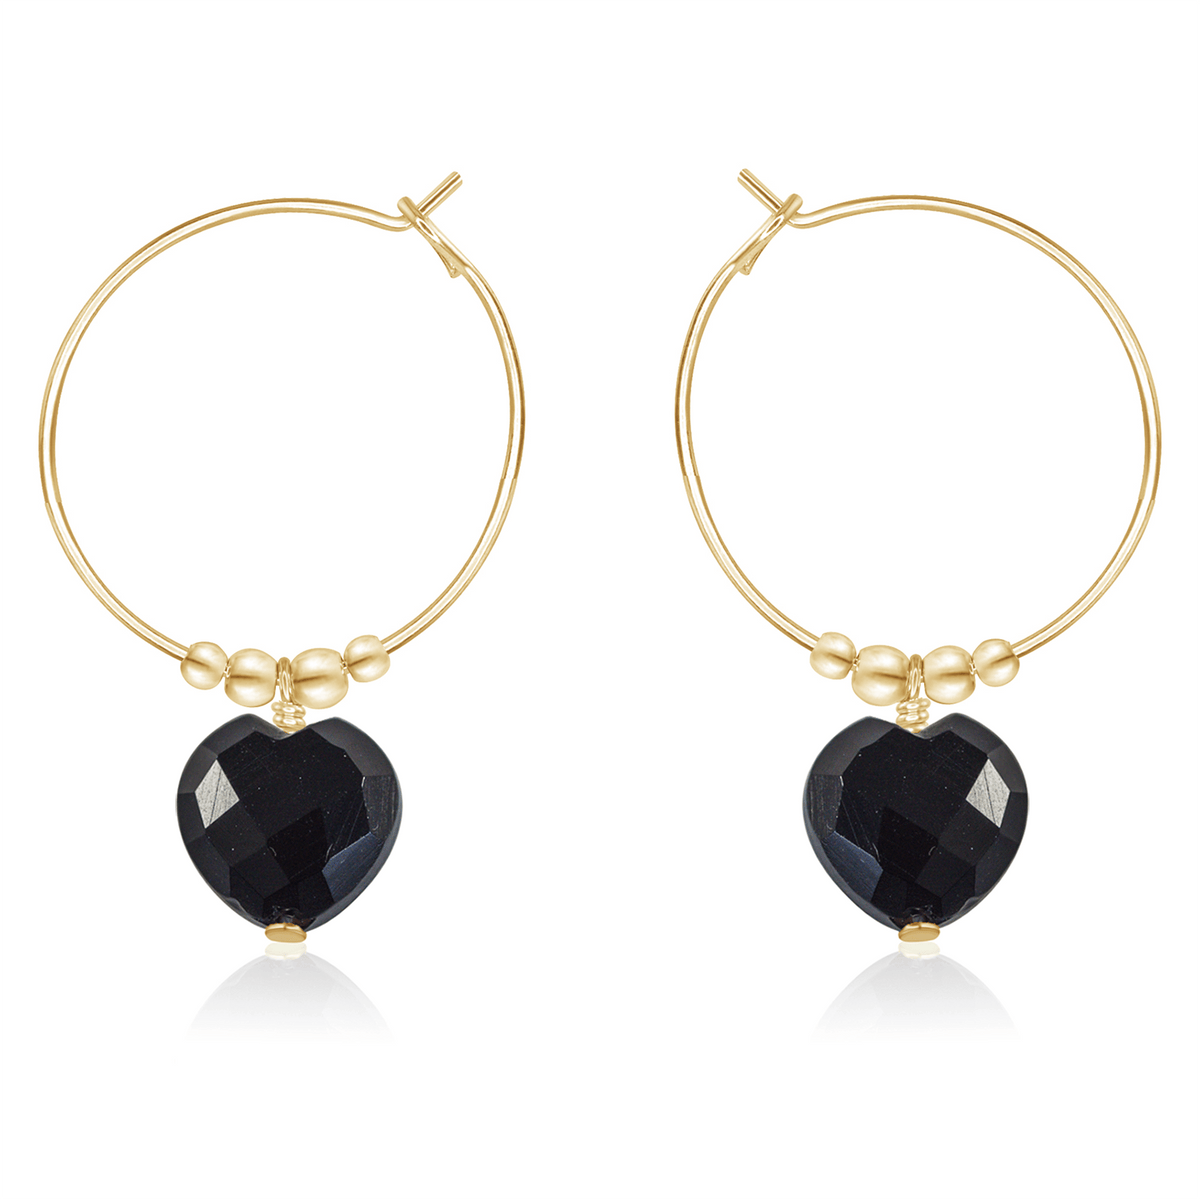 Black Onyx Crystal Heart Dangle Hoop Earrings - Black Onyx Crystal Heart Dangle Hoop Earrings - 14k Gold Fill - Luna Tide Handmade Crystal Jewellery